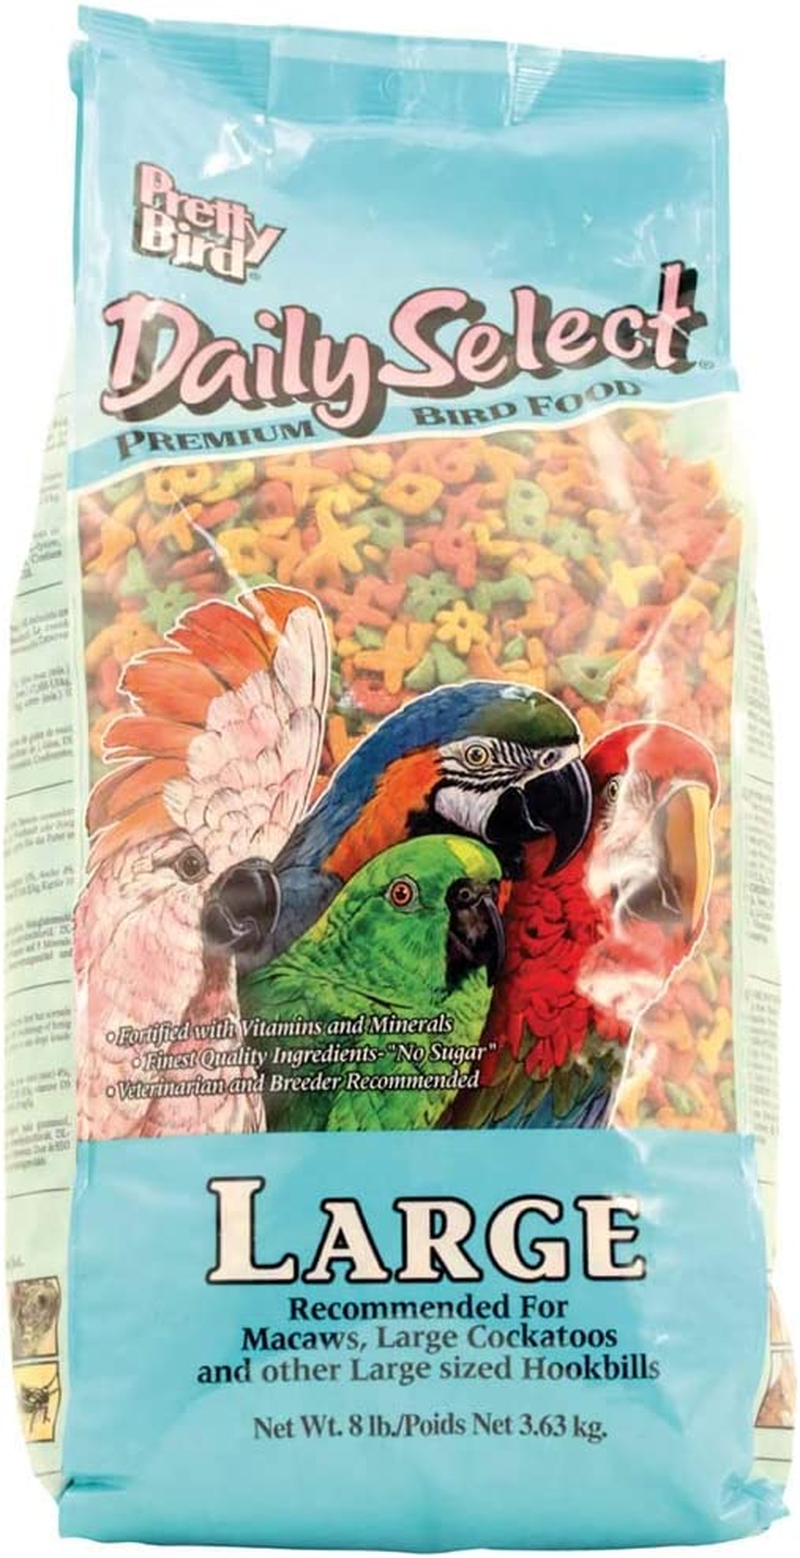 International Bpb73118 3-Pound Daily Select Premium Bird Food, Large